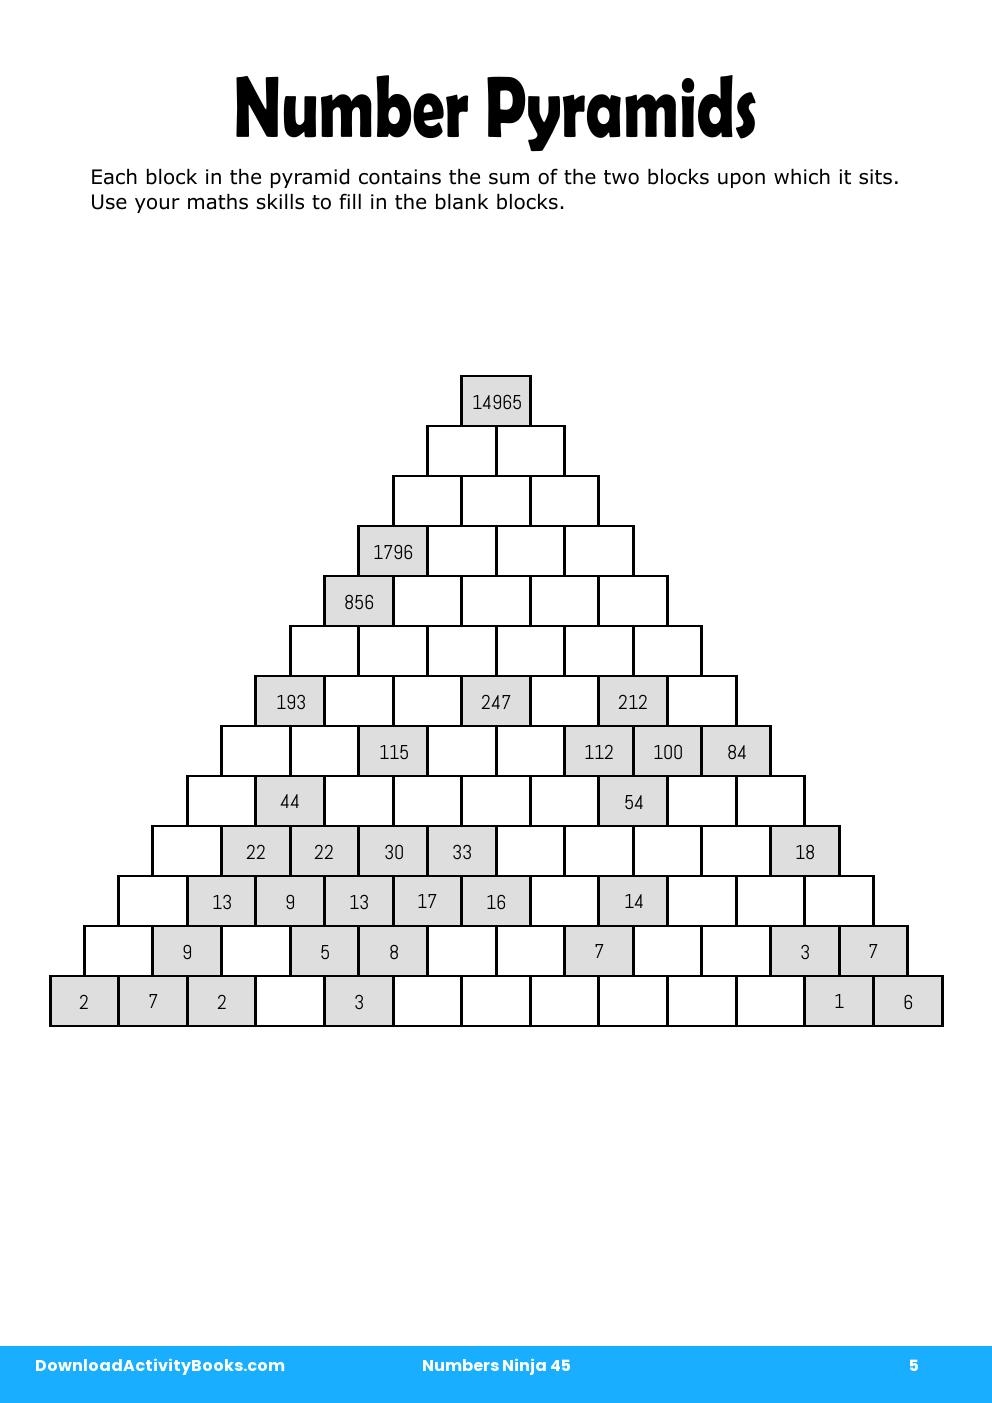 Number Pyramids in Numbers Ninja 45